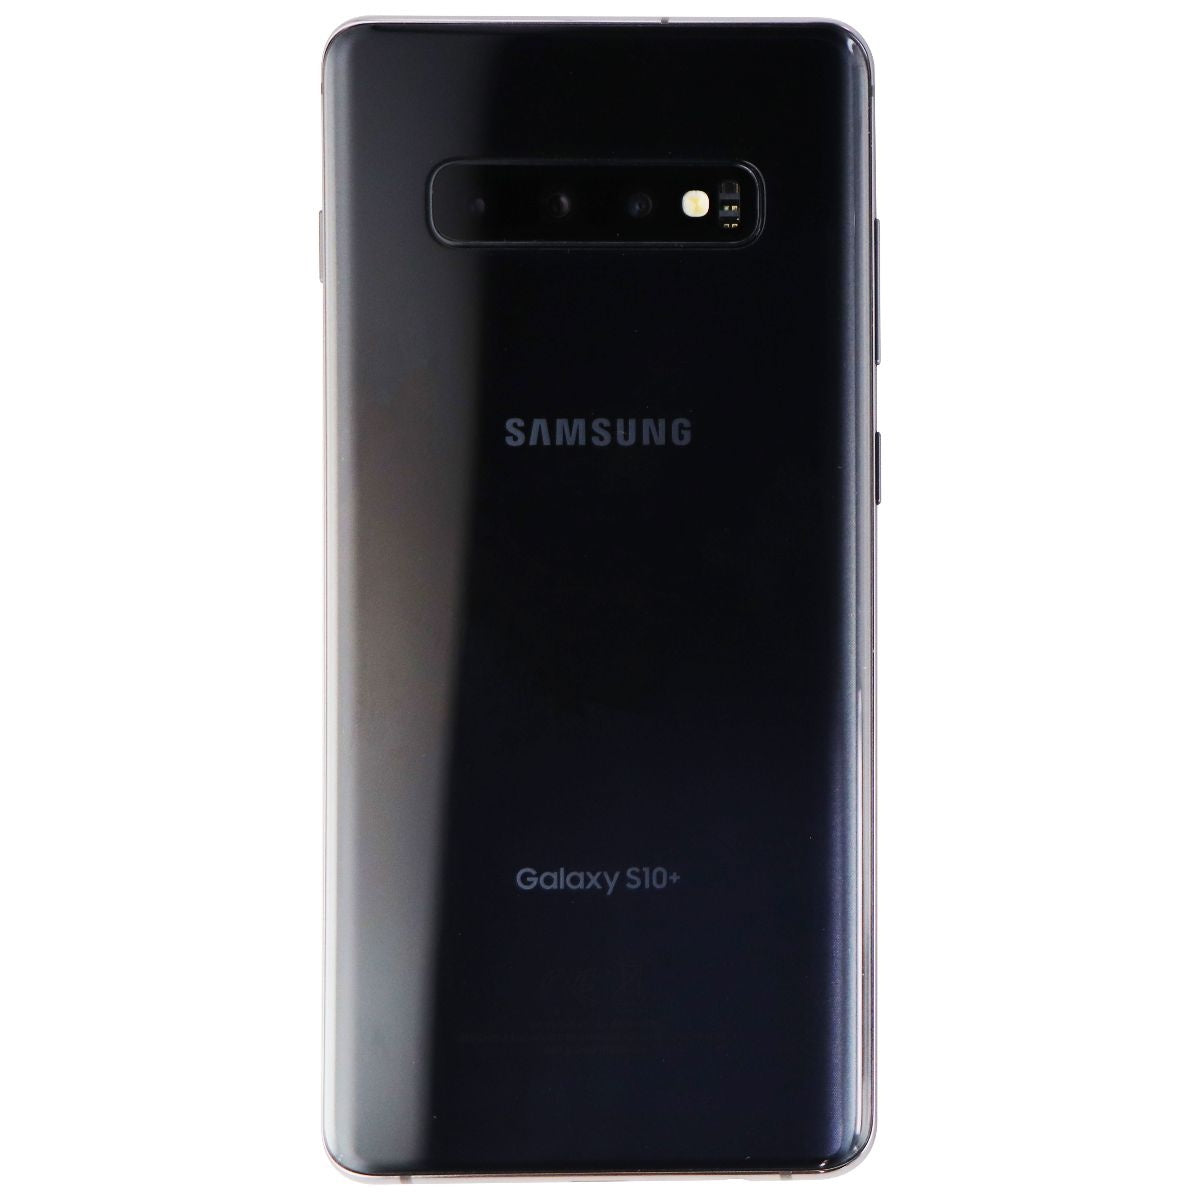 Samsung Galaxy S10+ (Plus) SM-G975U1 (GSM + Verizon) - 128GB / Prism Black Cell Phones & Smartphones Samsung    - Simple Cell Bulk Wholesale Pricing - USA Seller